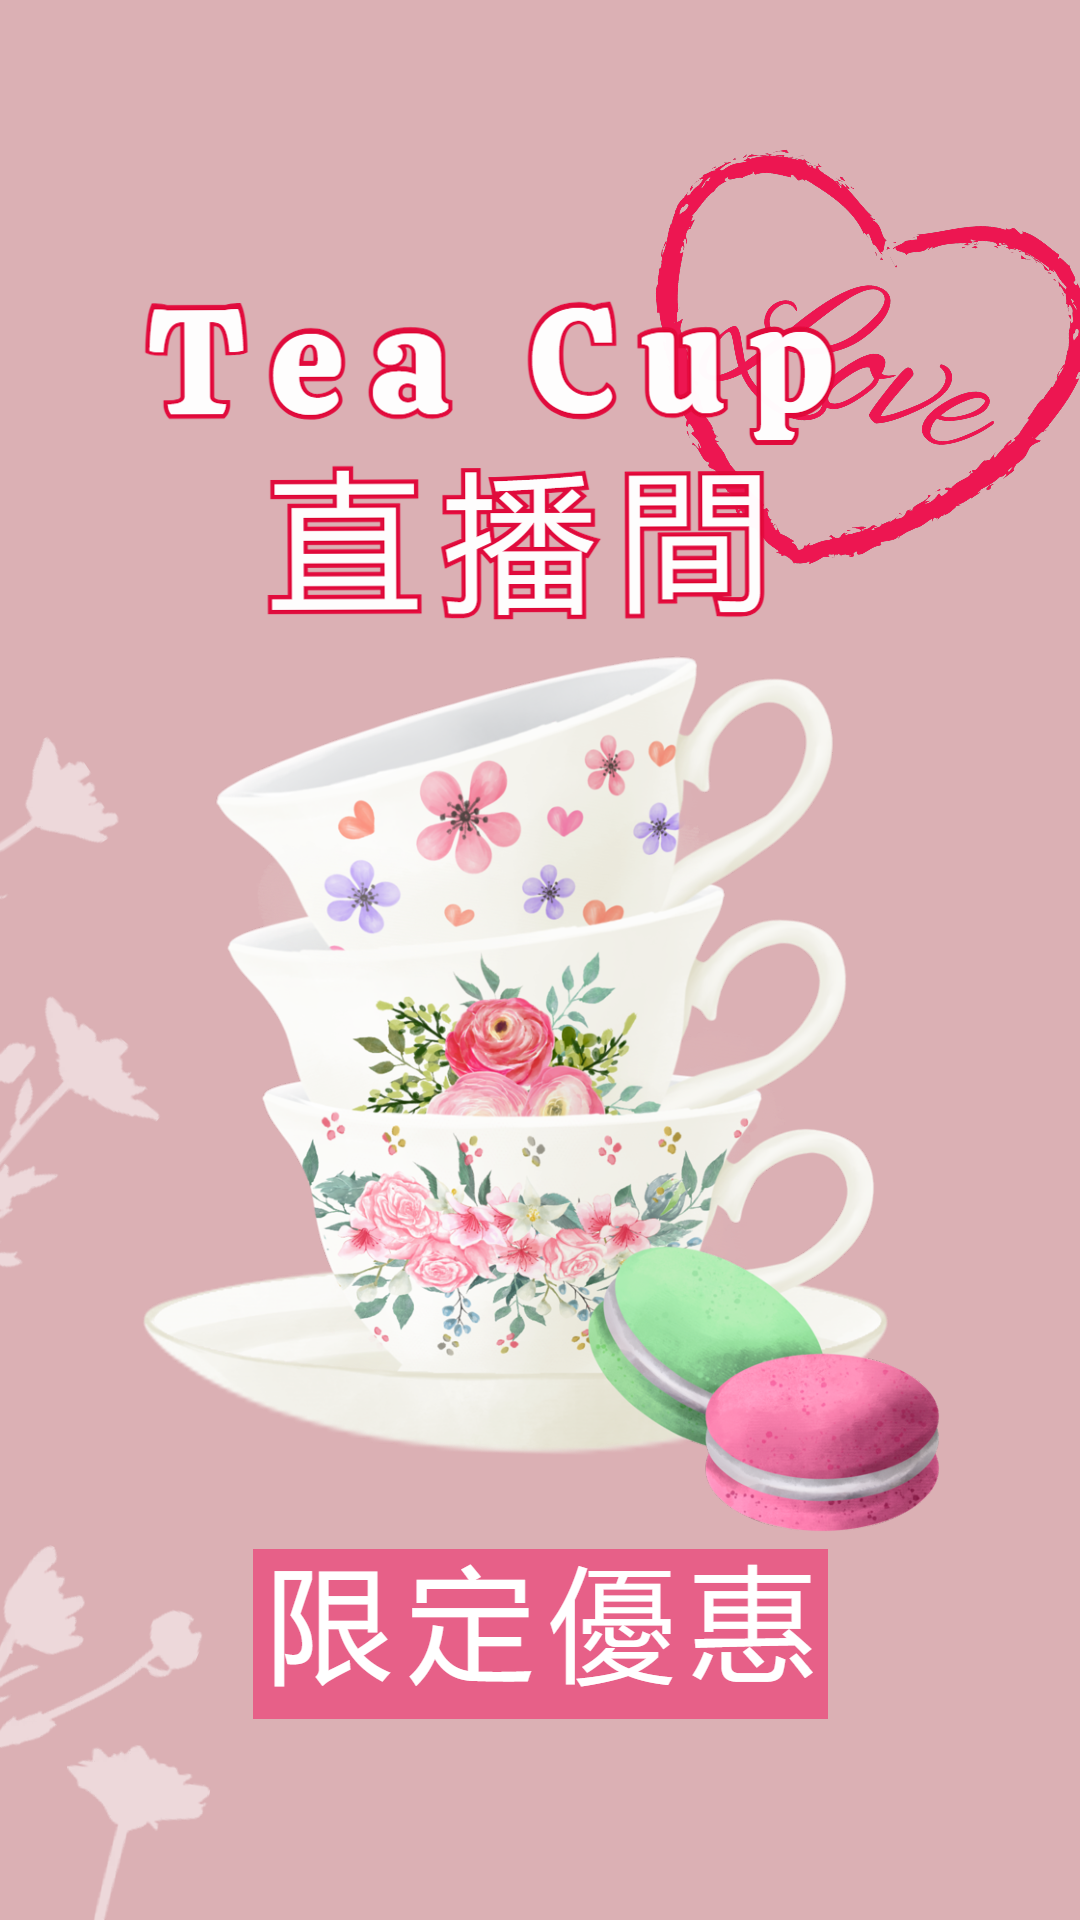 Tea Cup Live